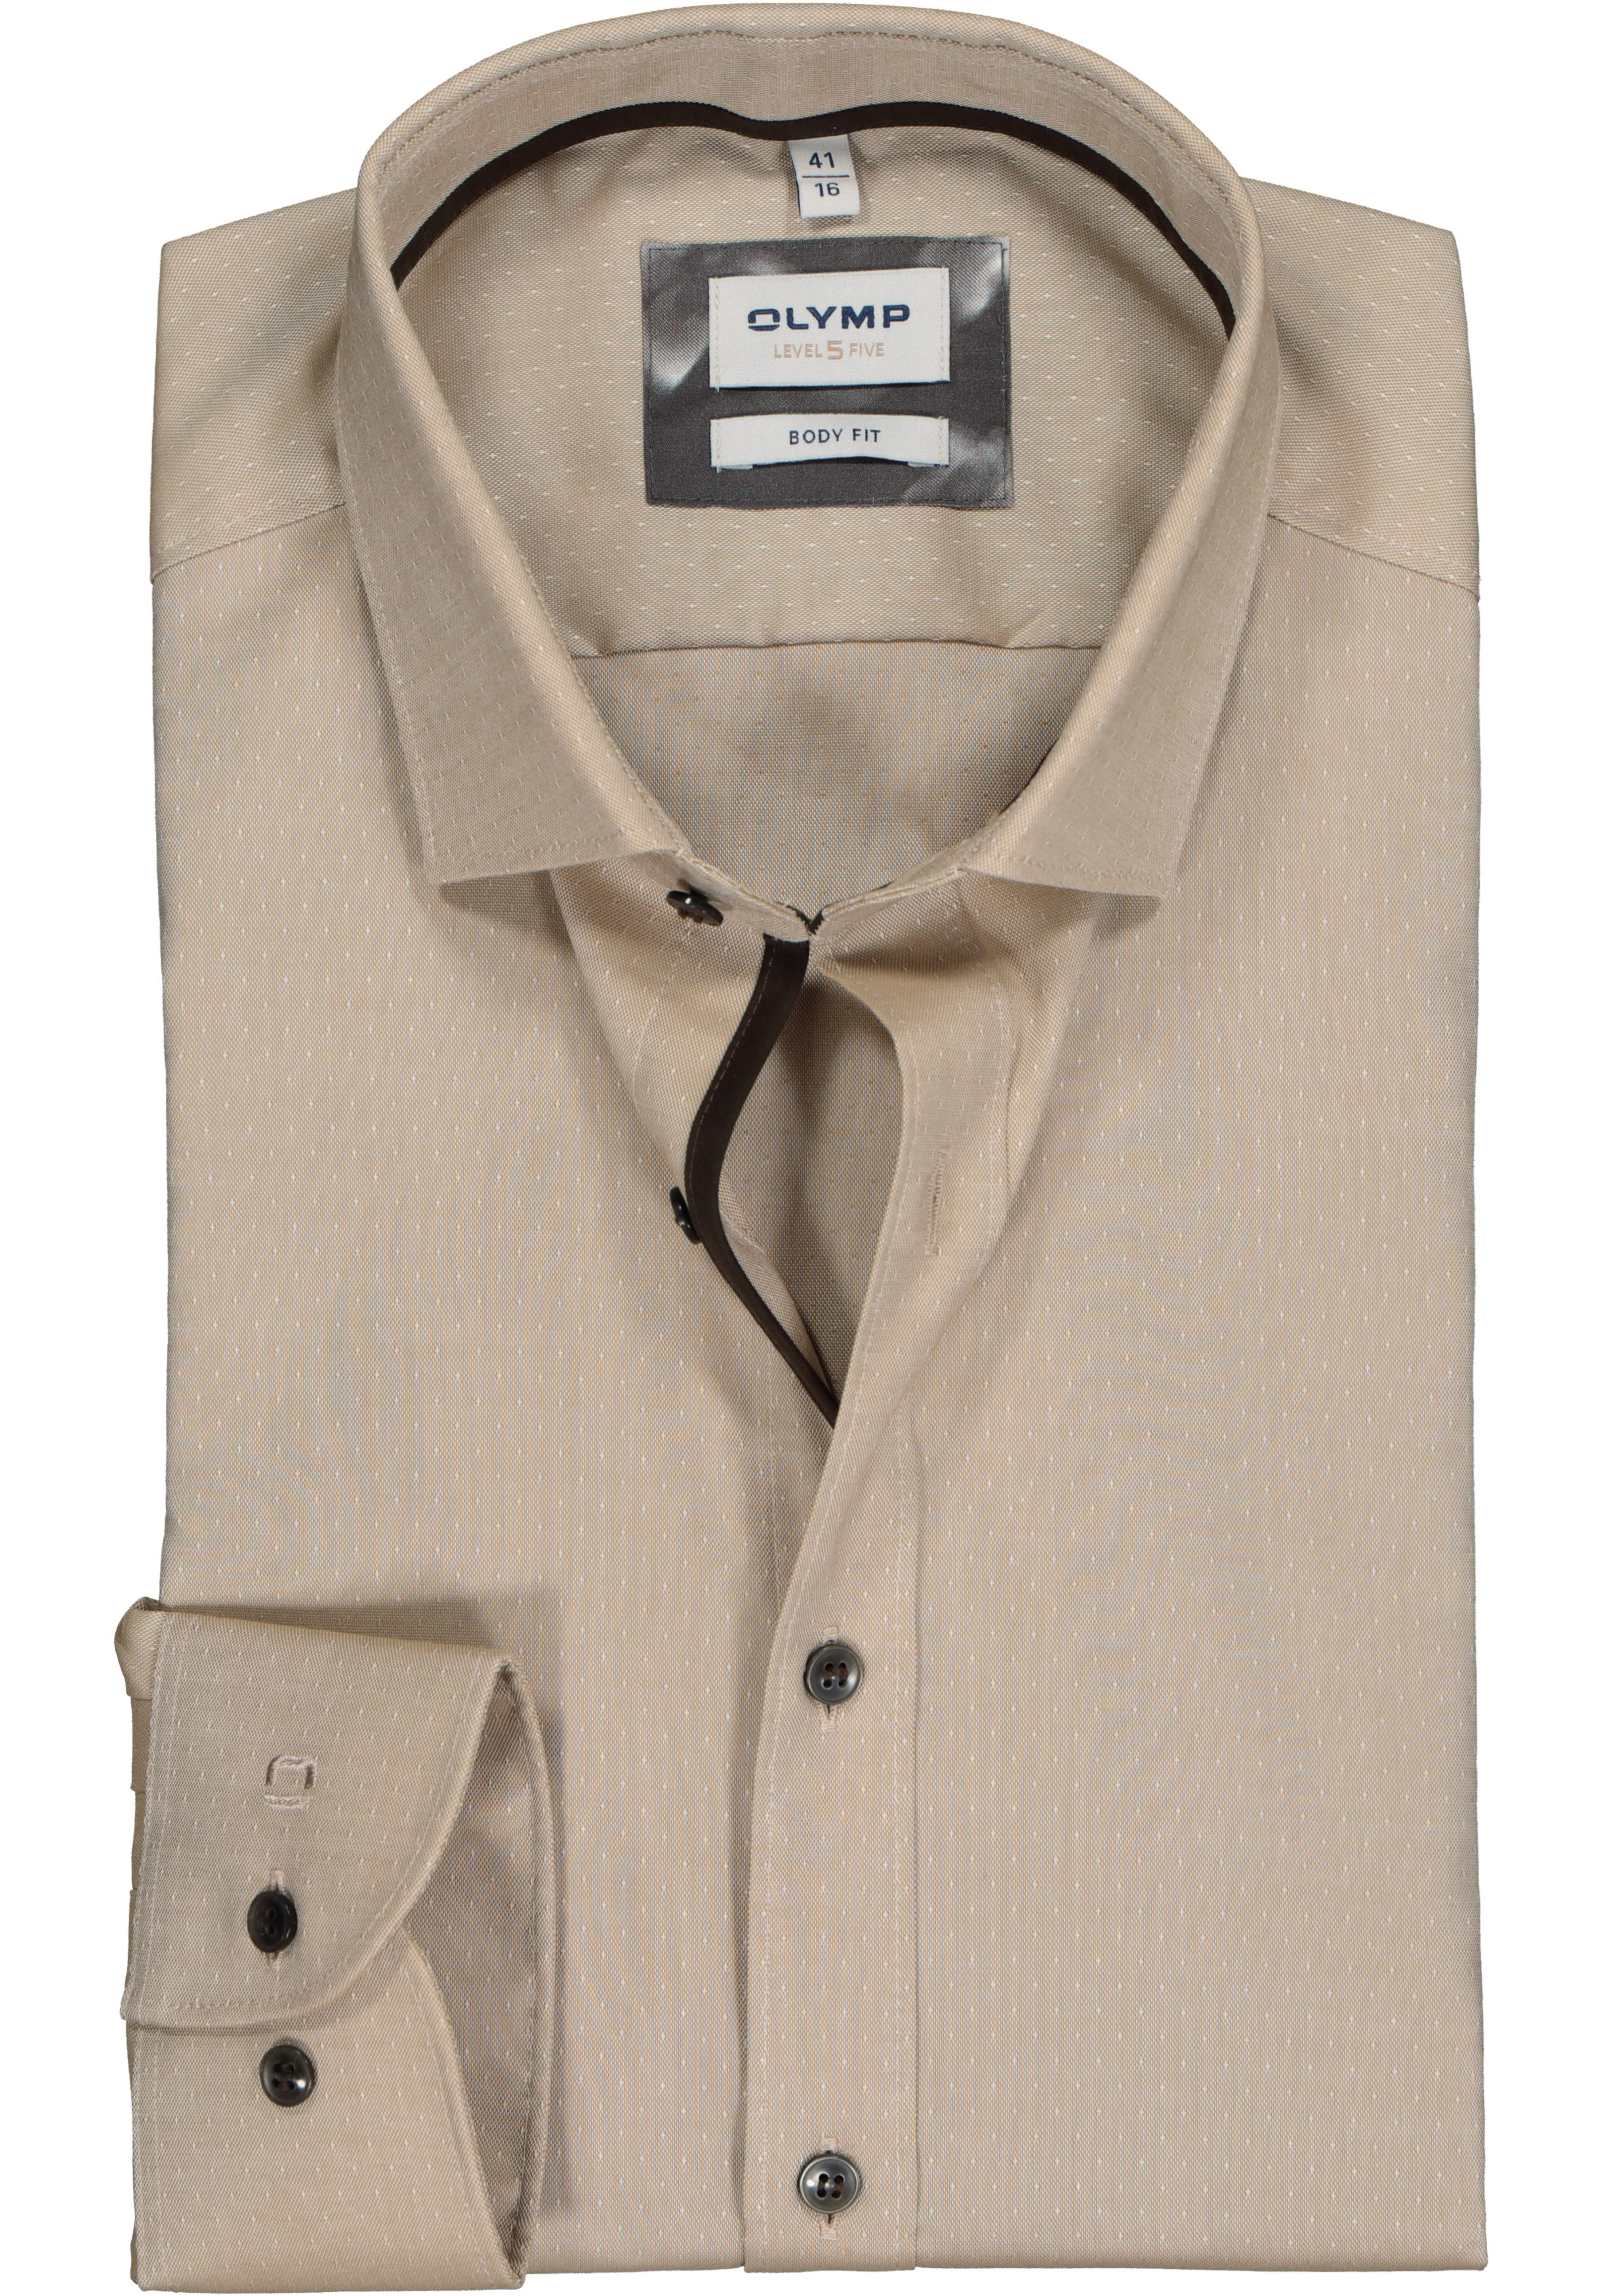 OLYMP Level 5 body fit overhemd, Oxford, beige mini dessin (contrast)